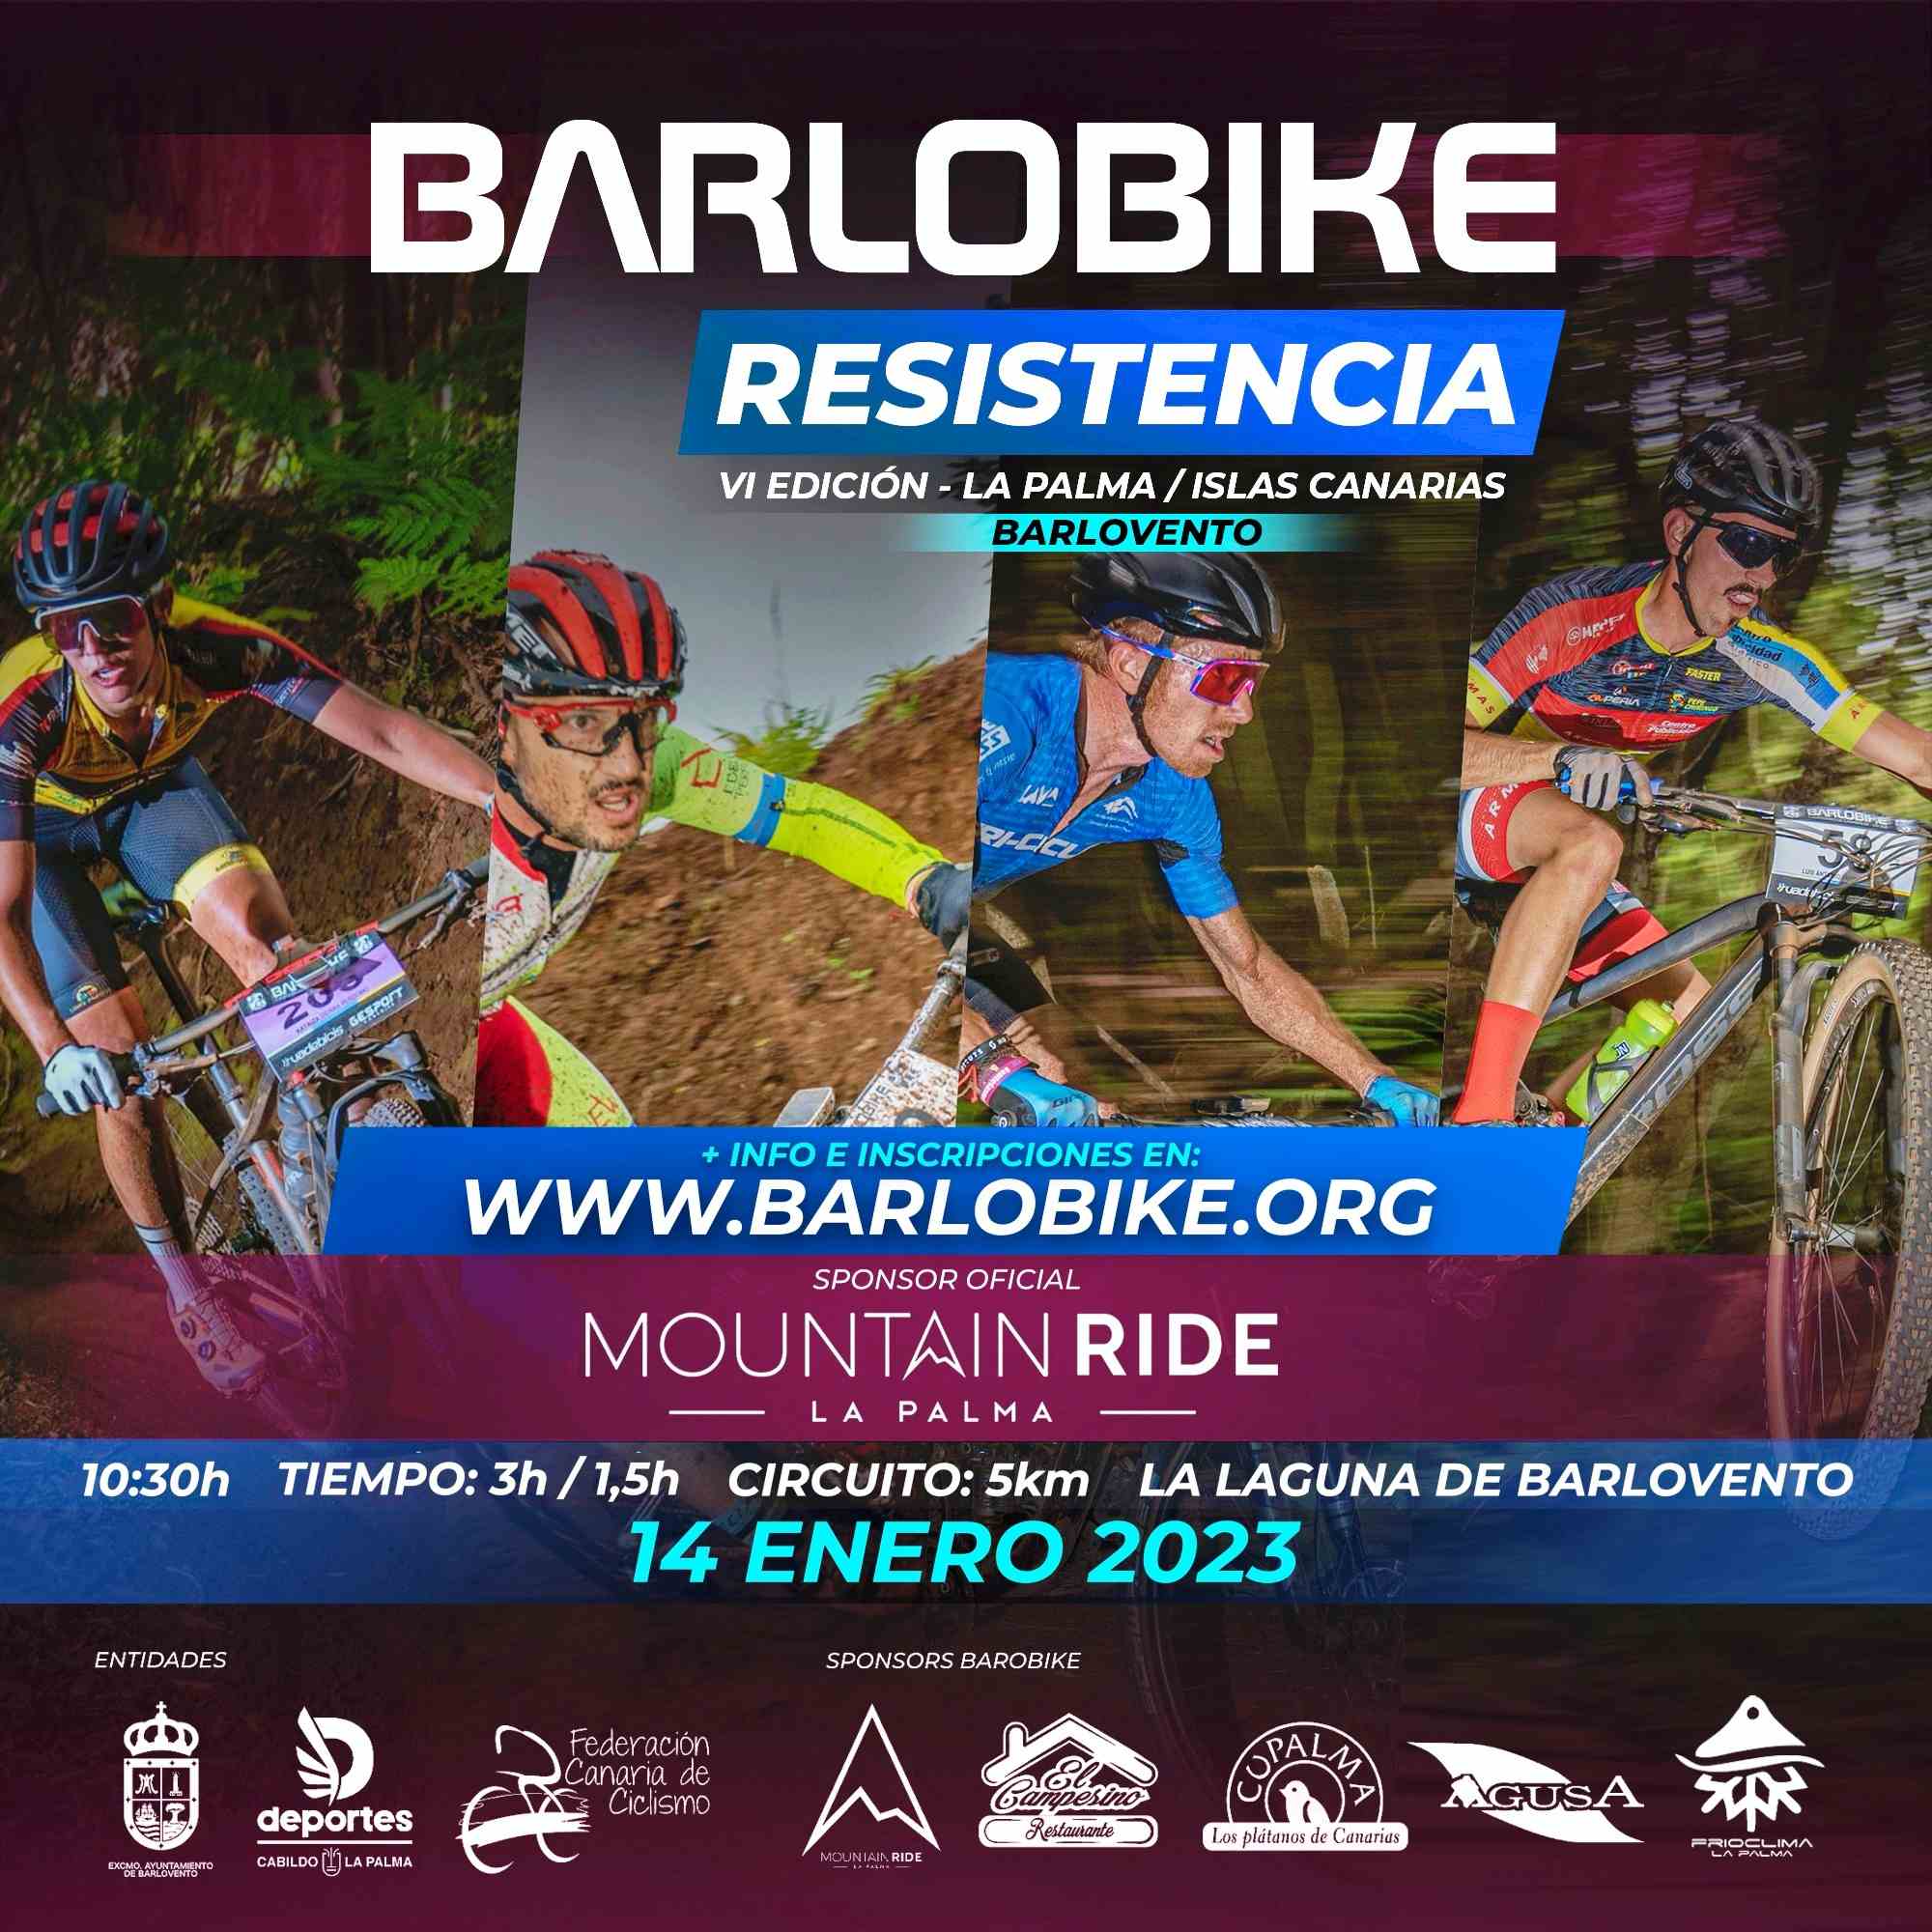 BARLOBIKE XC0 RESISTENCIA 2023 - Register